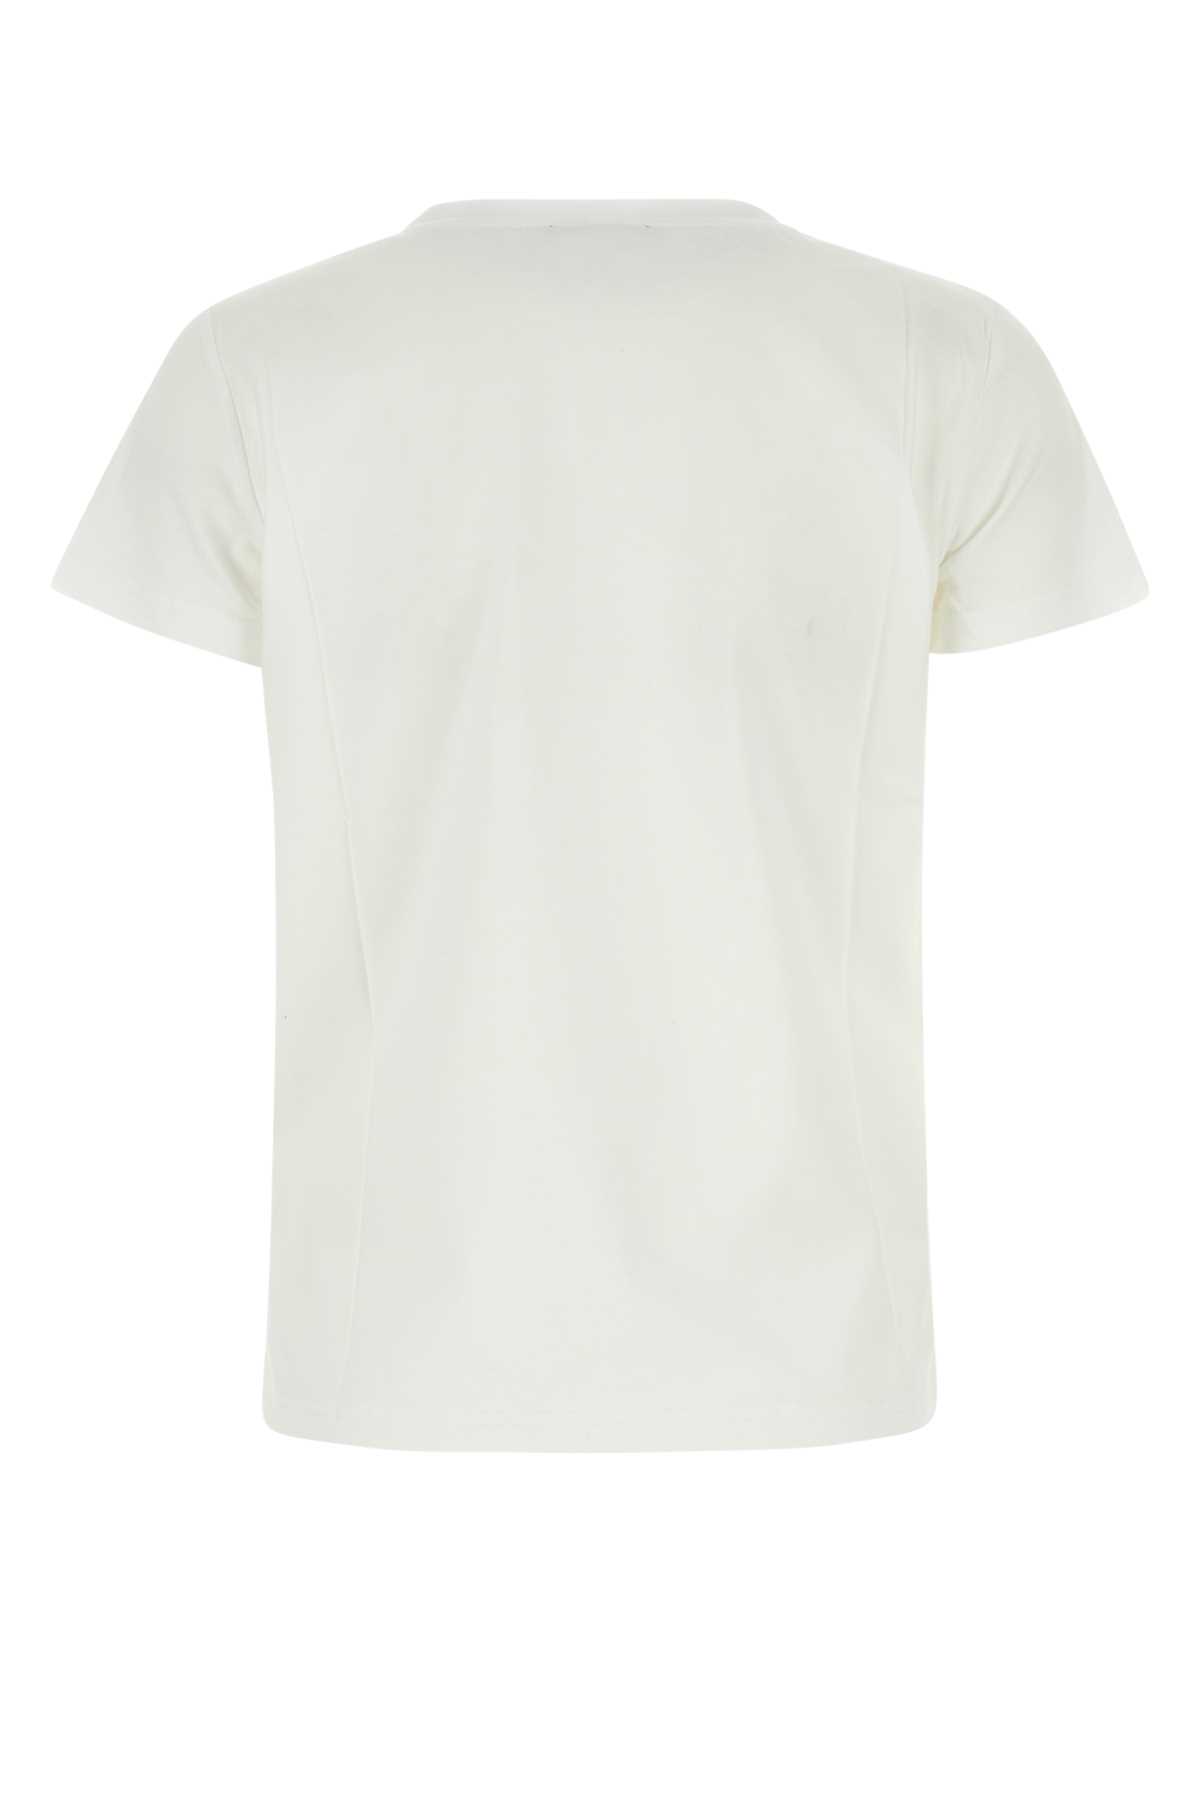 Apc White Cotton Item T-shirt